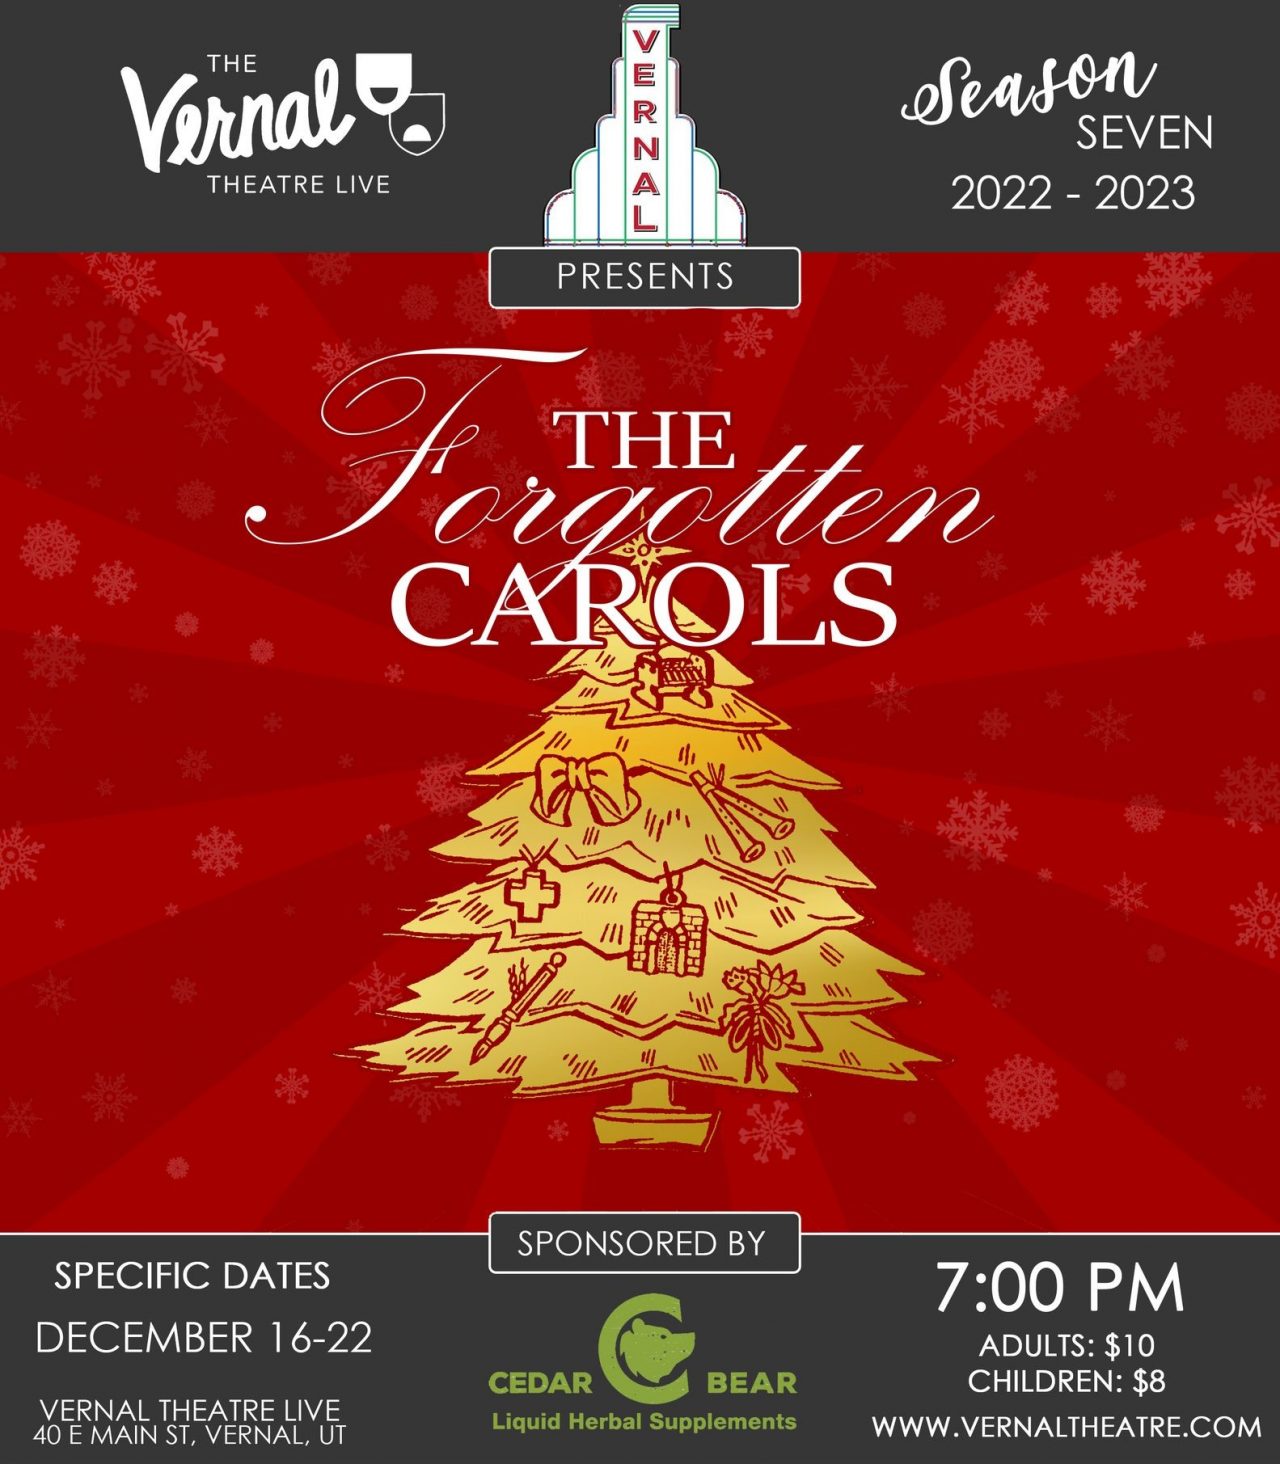 The Carols December Vernal Theatre Live